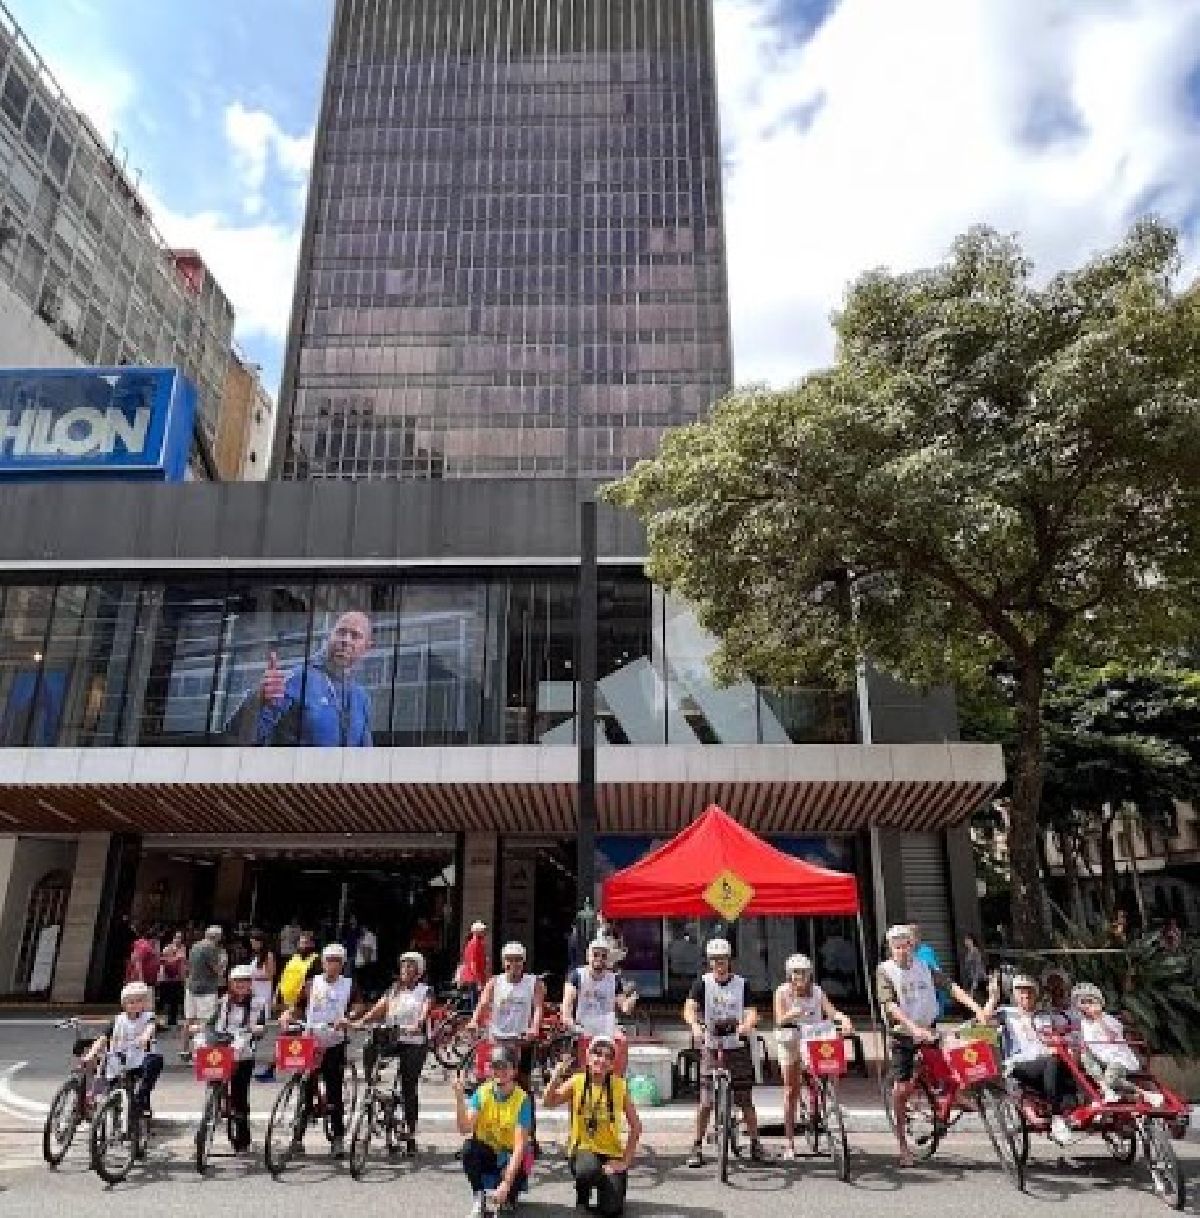 Top Center Shopping realiza tours pela Avenida Paulista gratuitos aos domingos